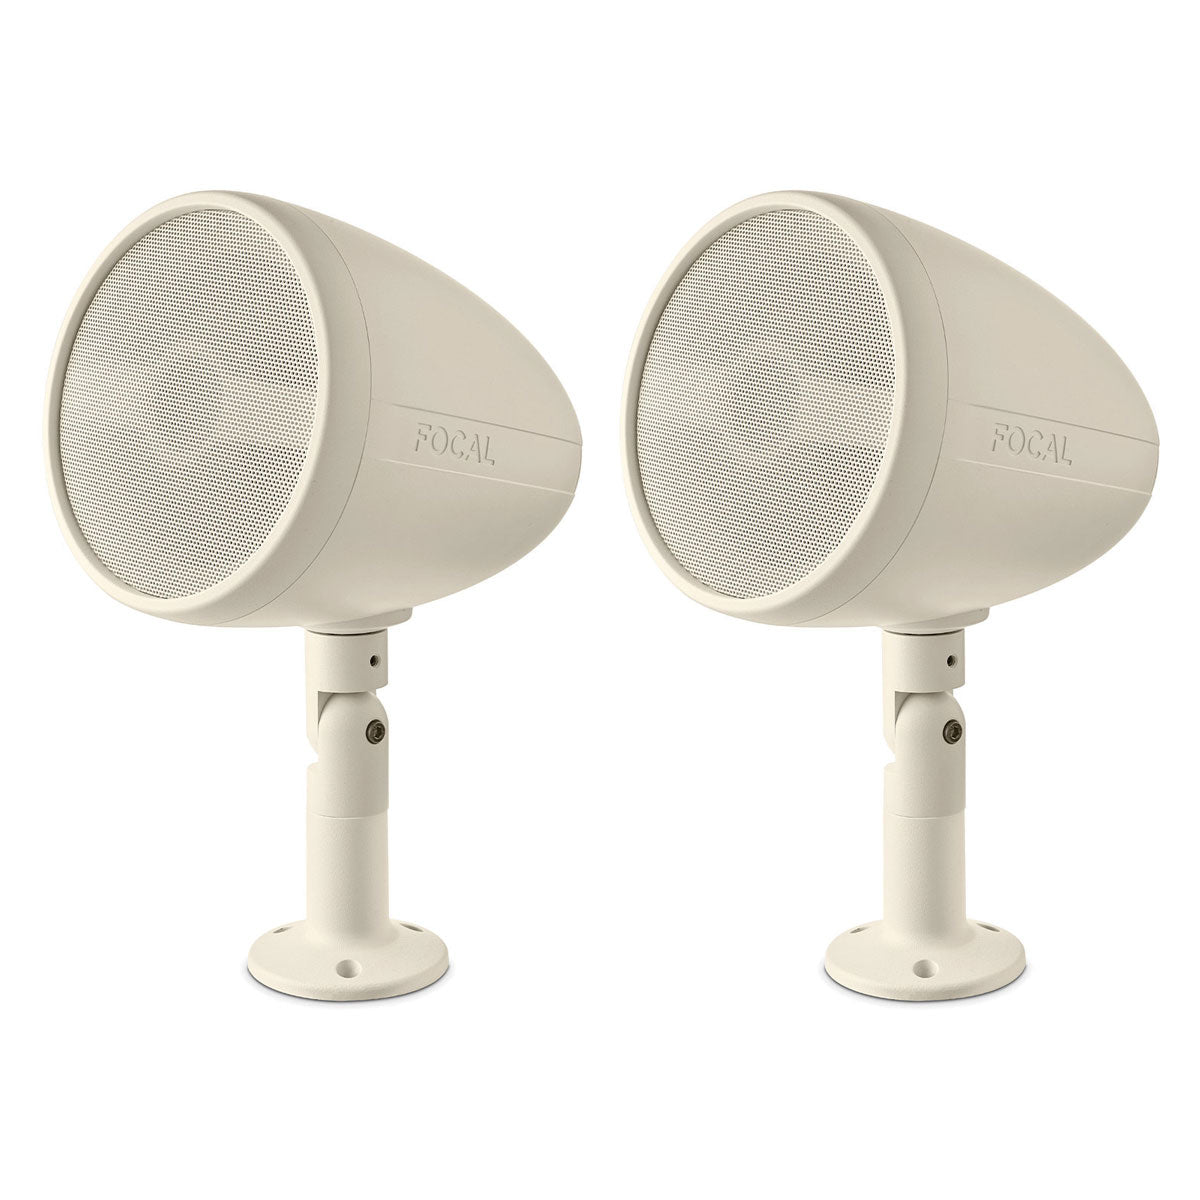 Focal OD SAT 5 5" 2-Way Outdoor Speaker - Pair (Light)